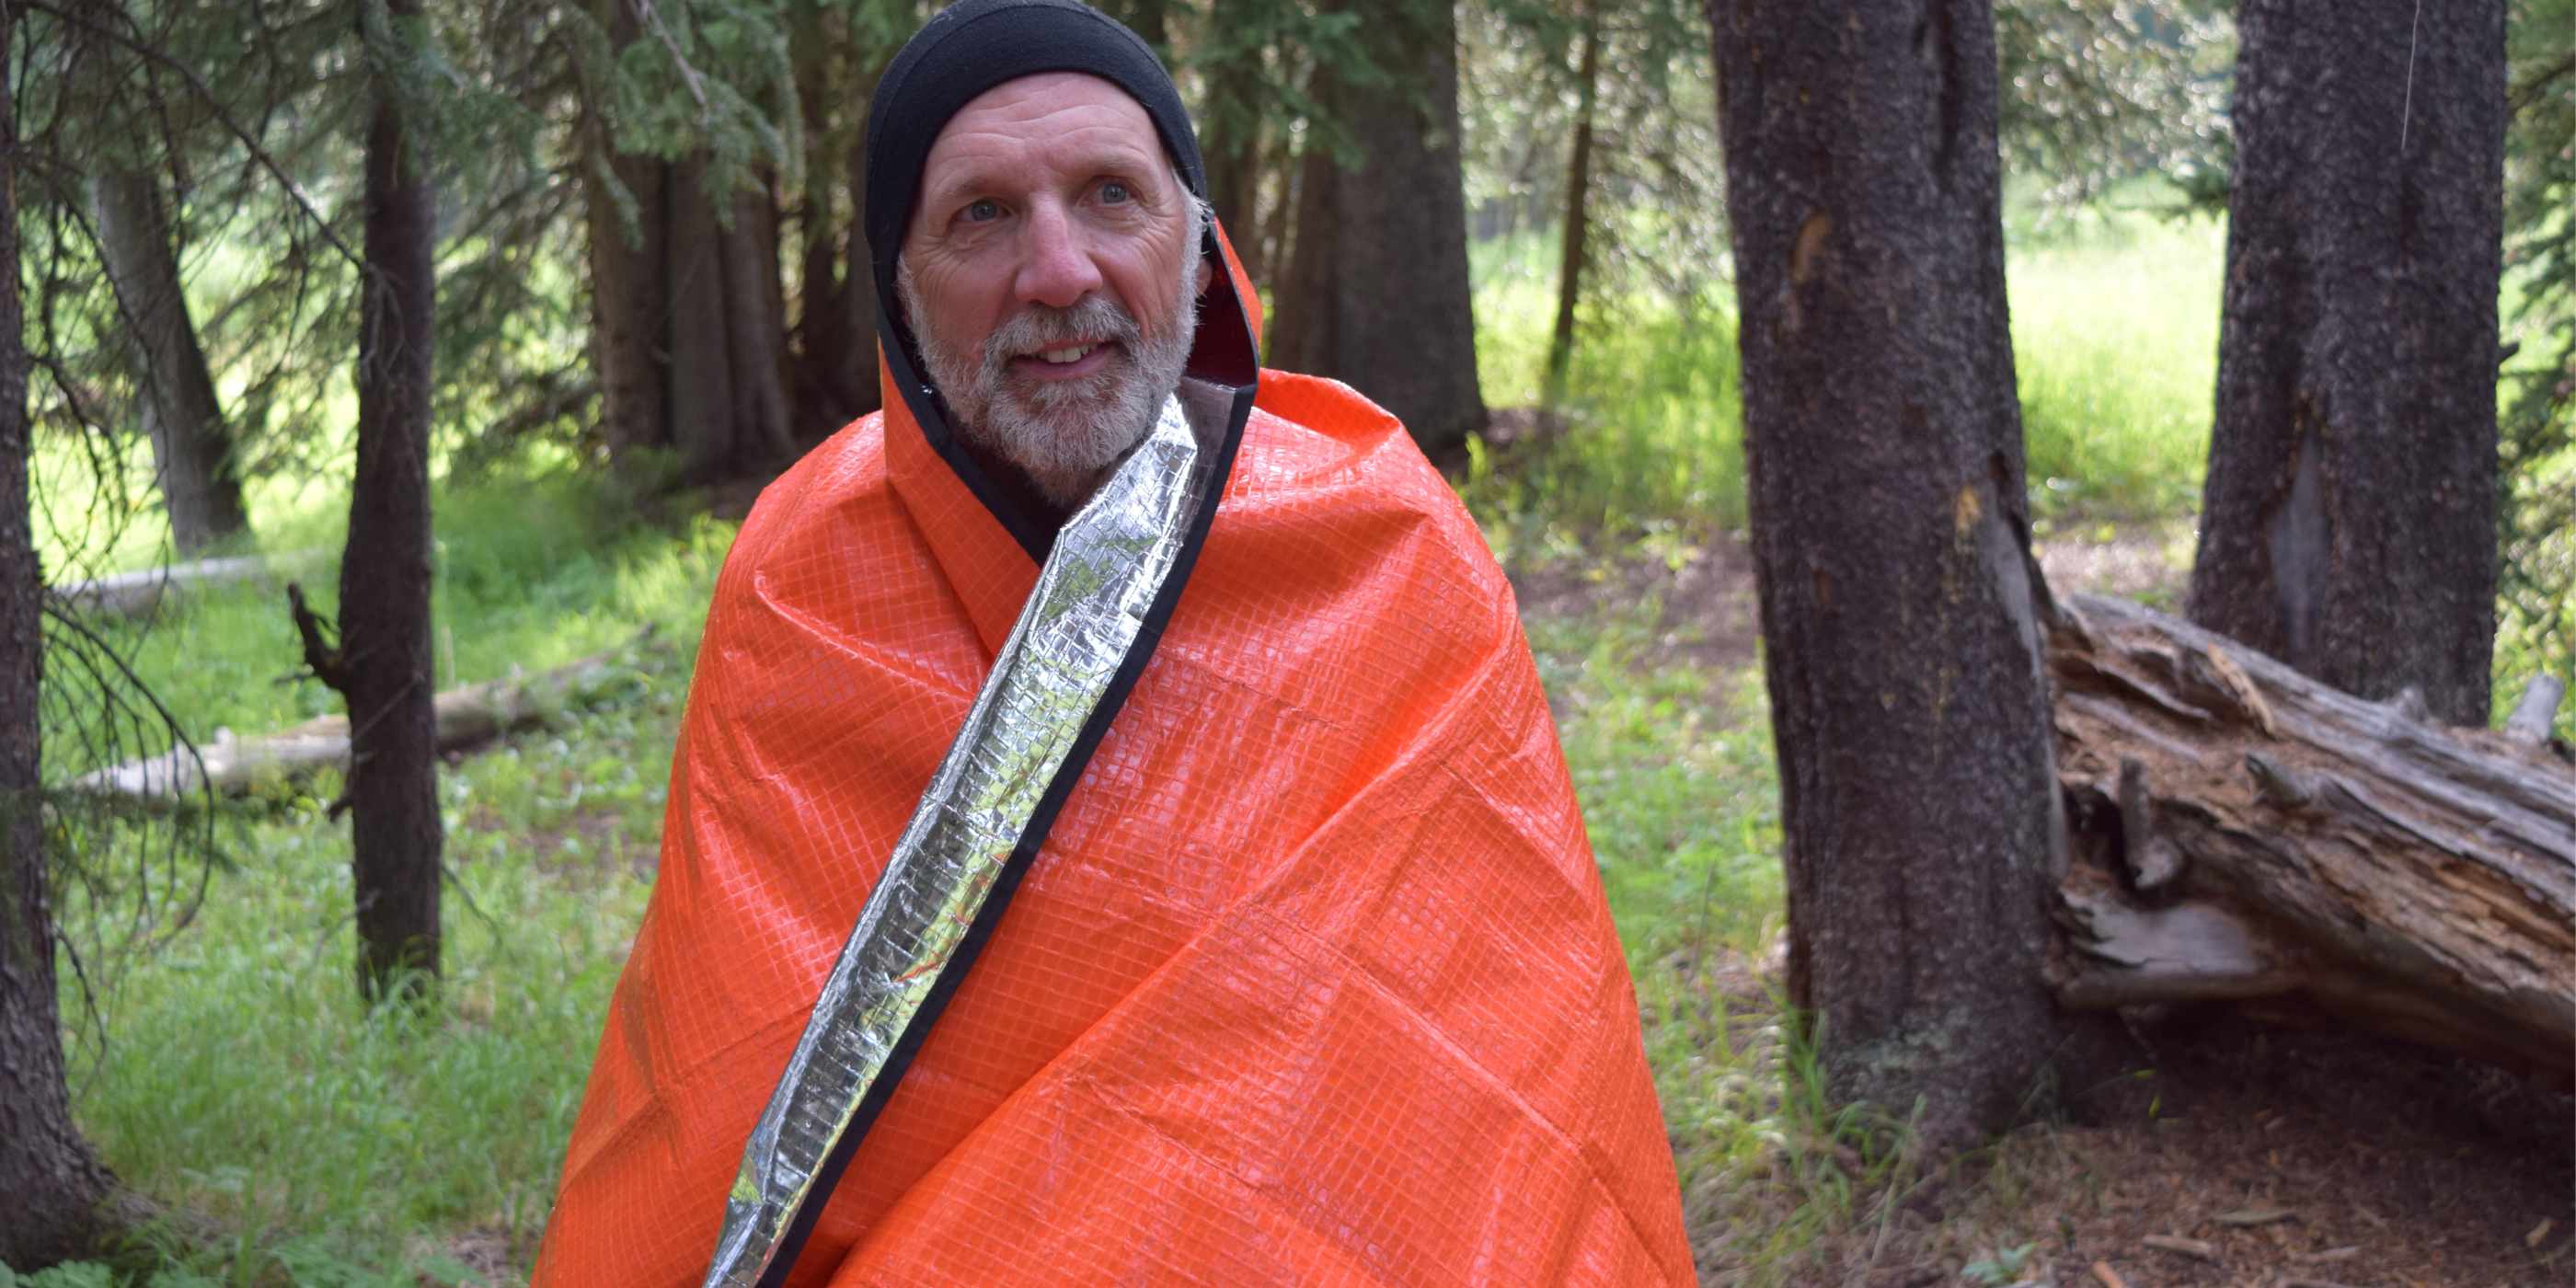 Man Wrapped in SOL All Season Blanket in Woods